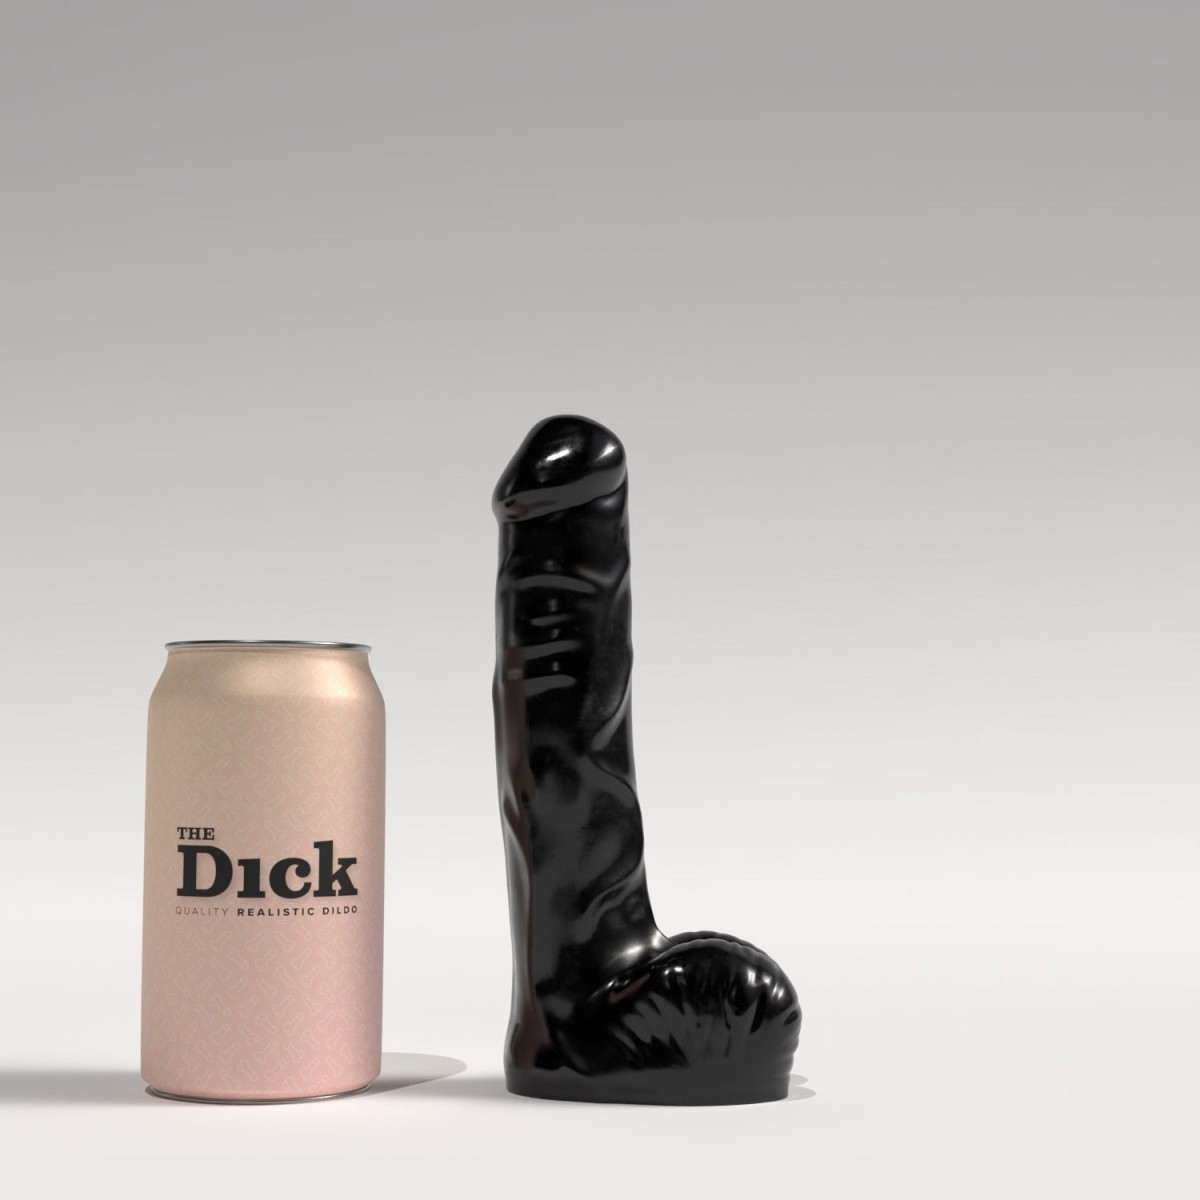 Dildo The Dick TD02 Richard čierne, realistické dildo 18,5 x 4 cm